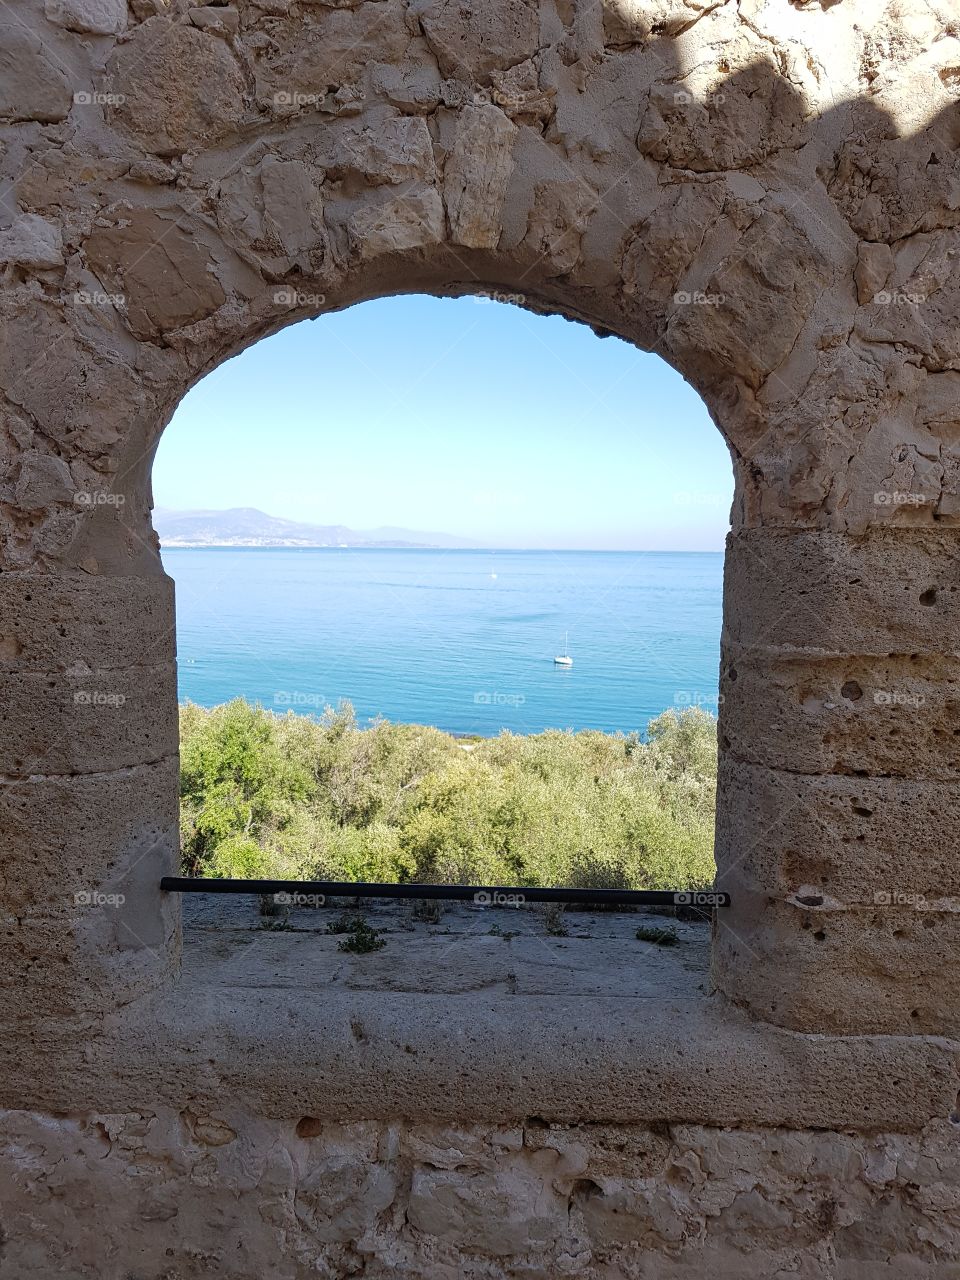 Fort carré at Antibes - Côte d'Azur France